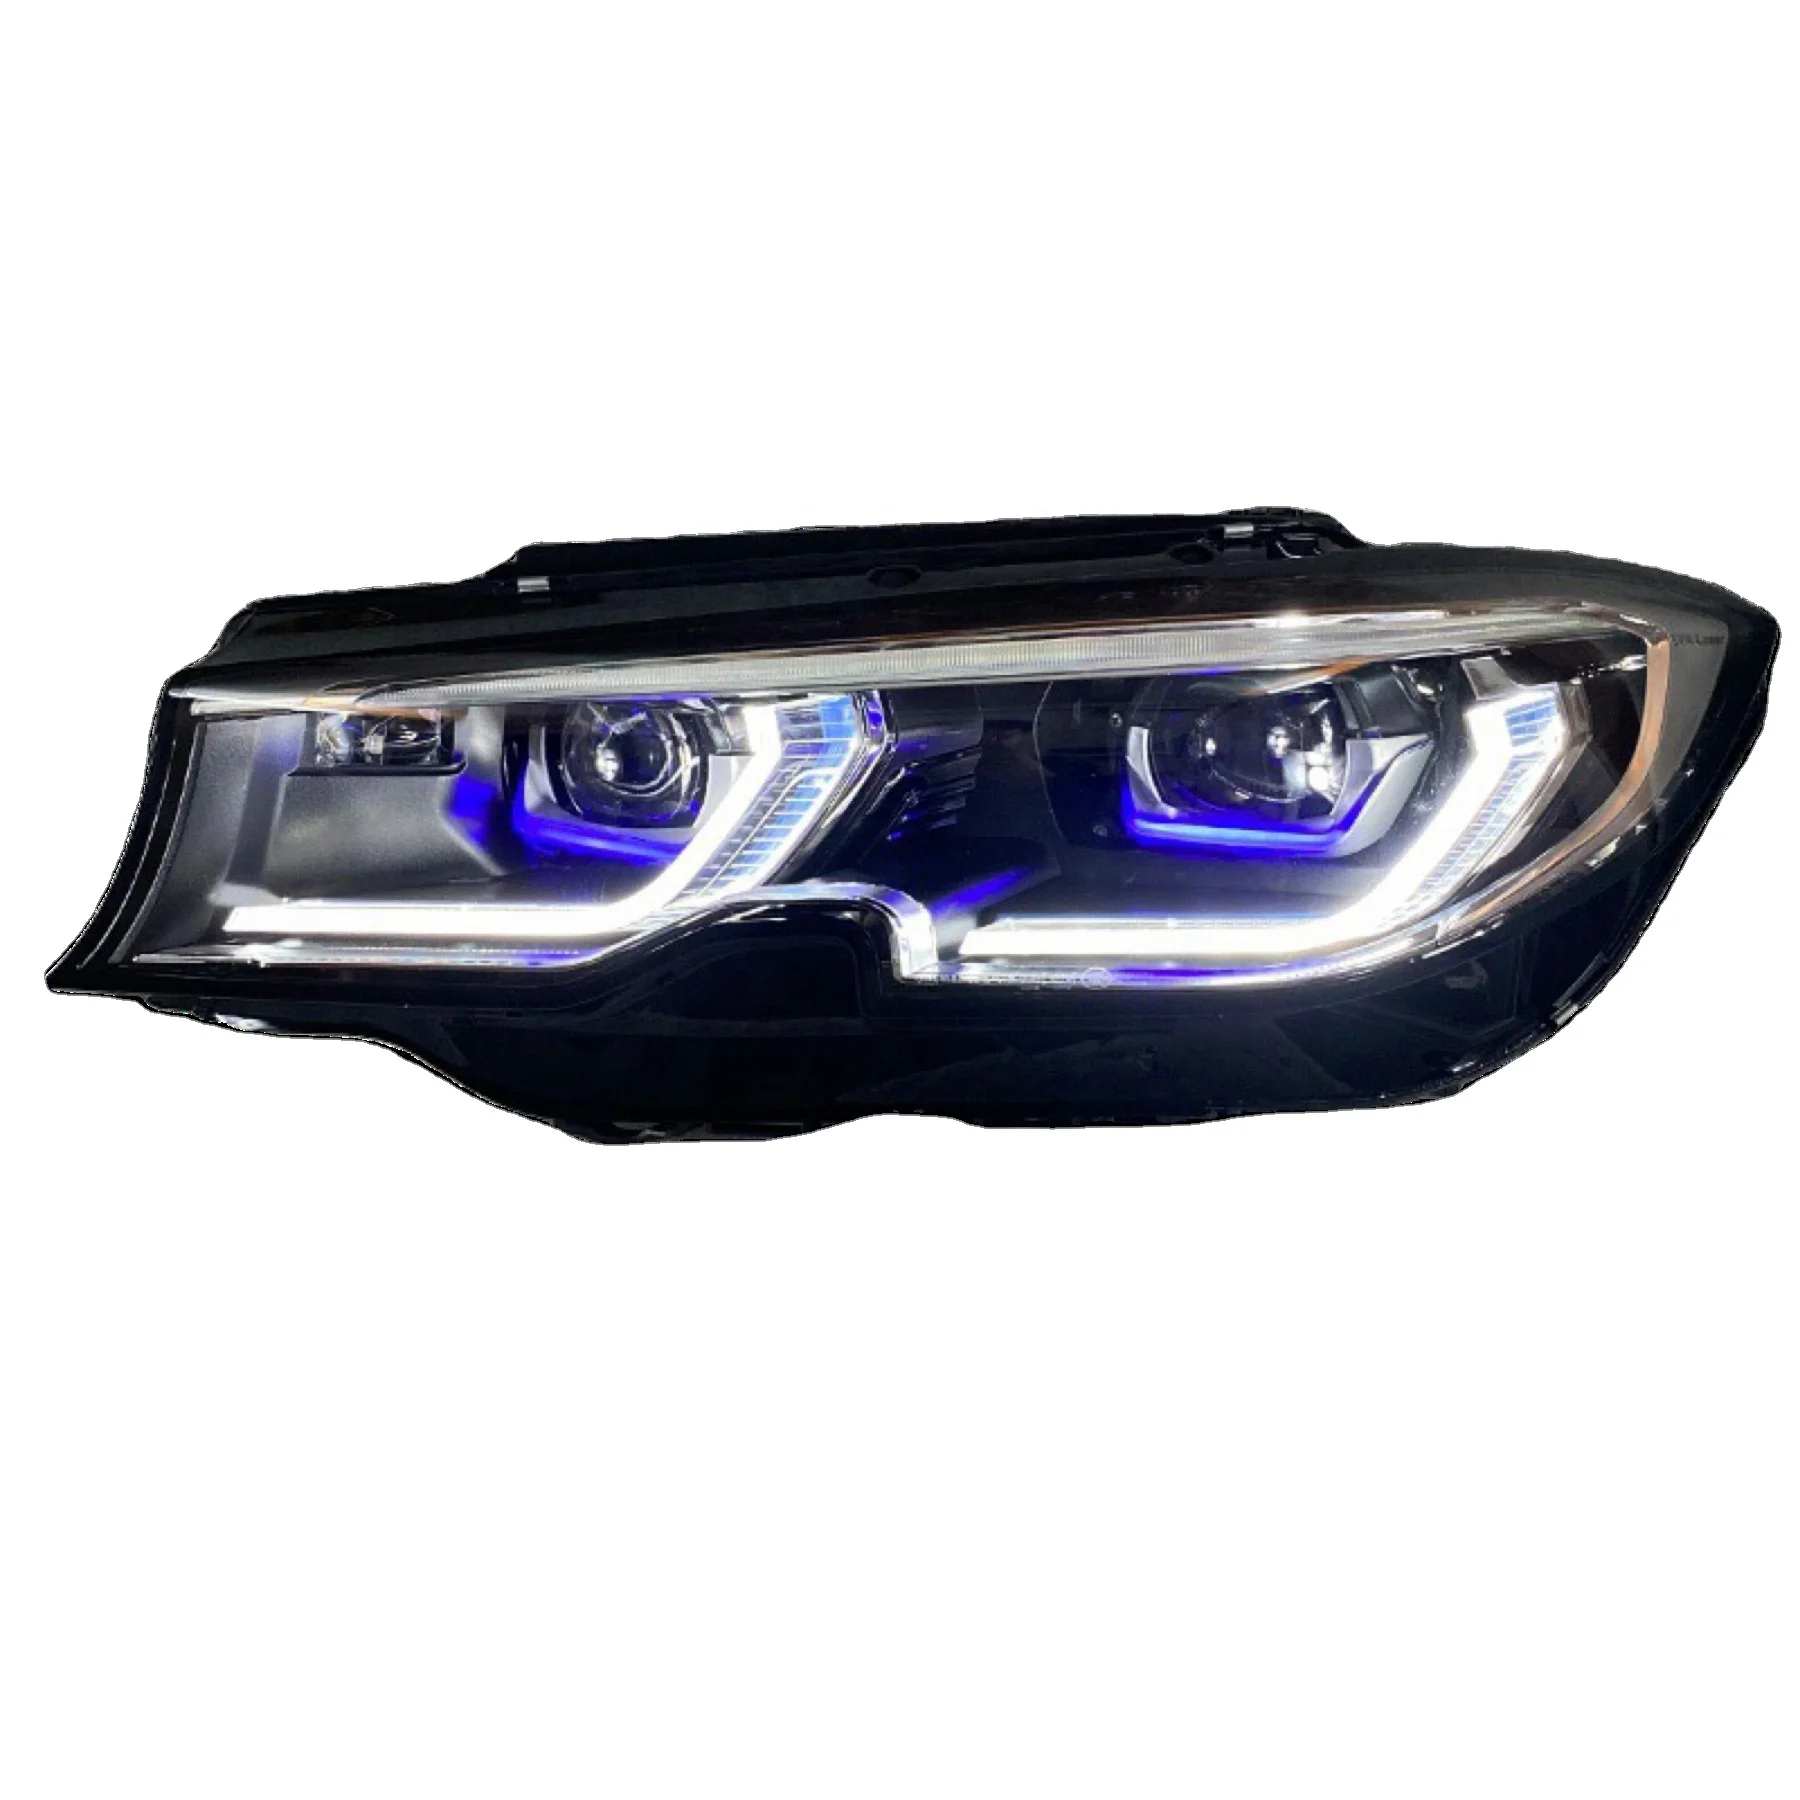 

G20 modified laser headlight for BMW 3 series 2018 G28 G20 LED Headlights upgrade to fashion laser version modify headlight